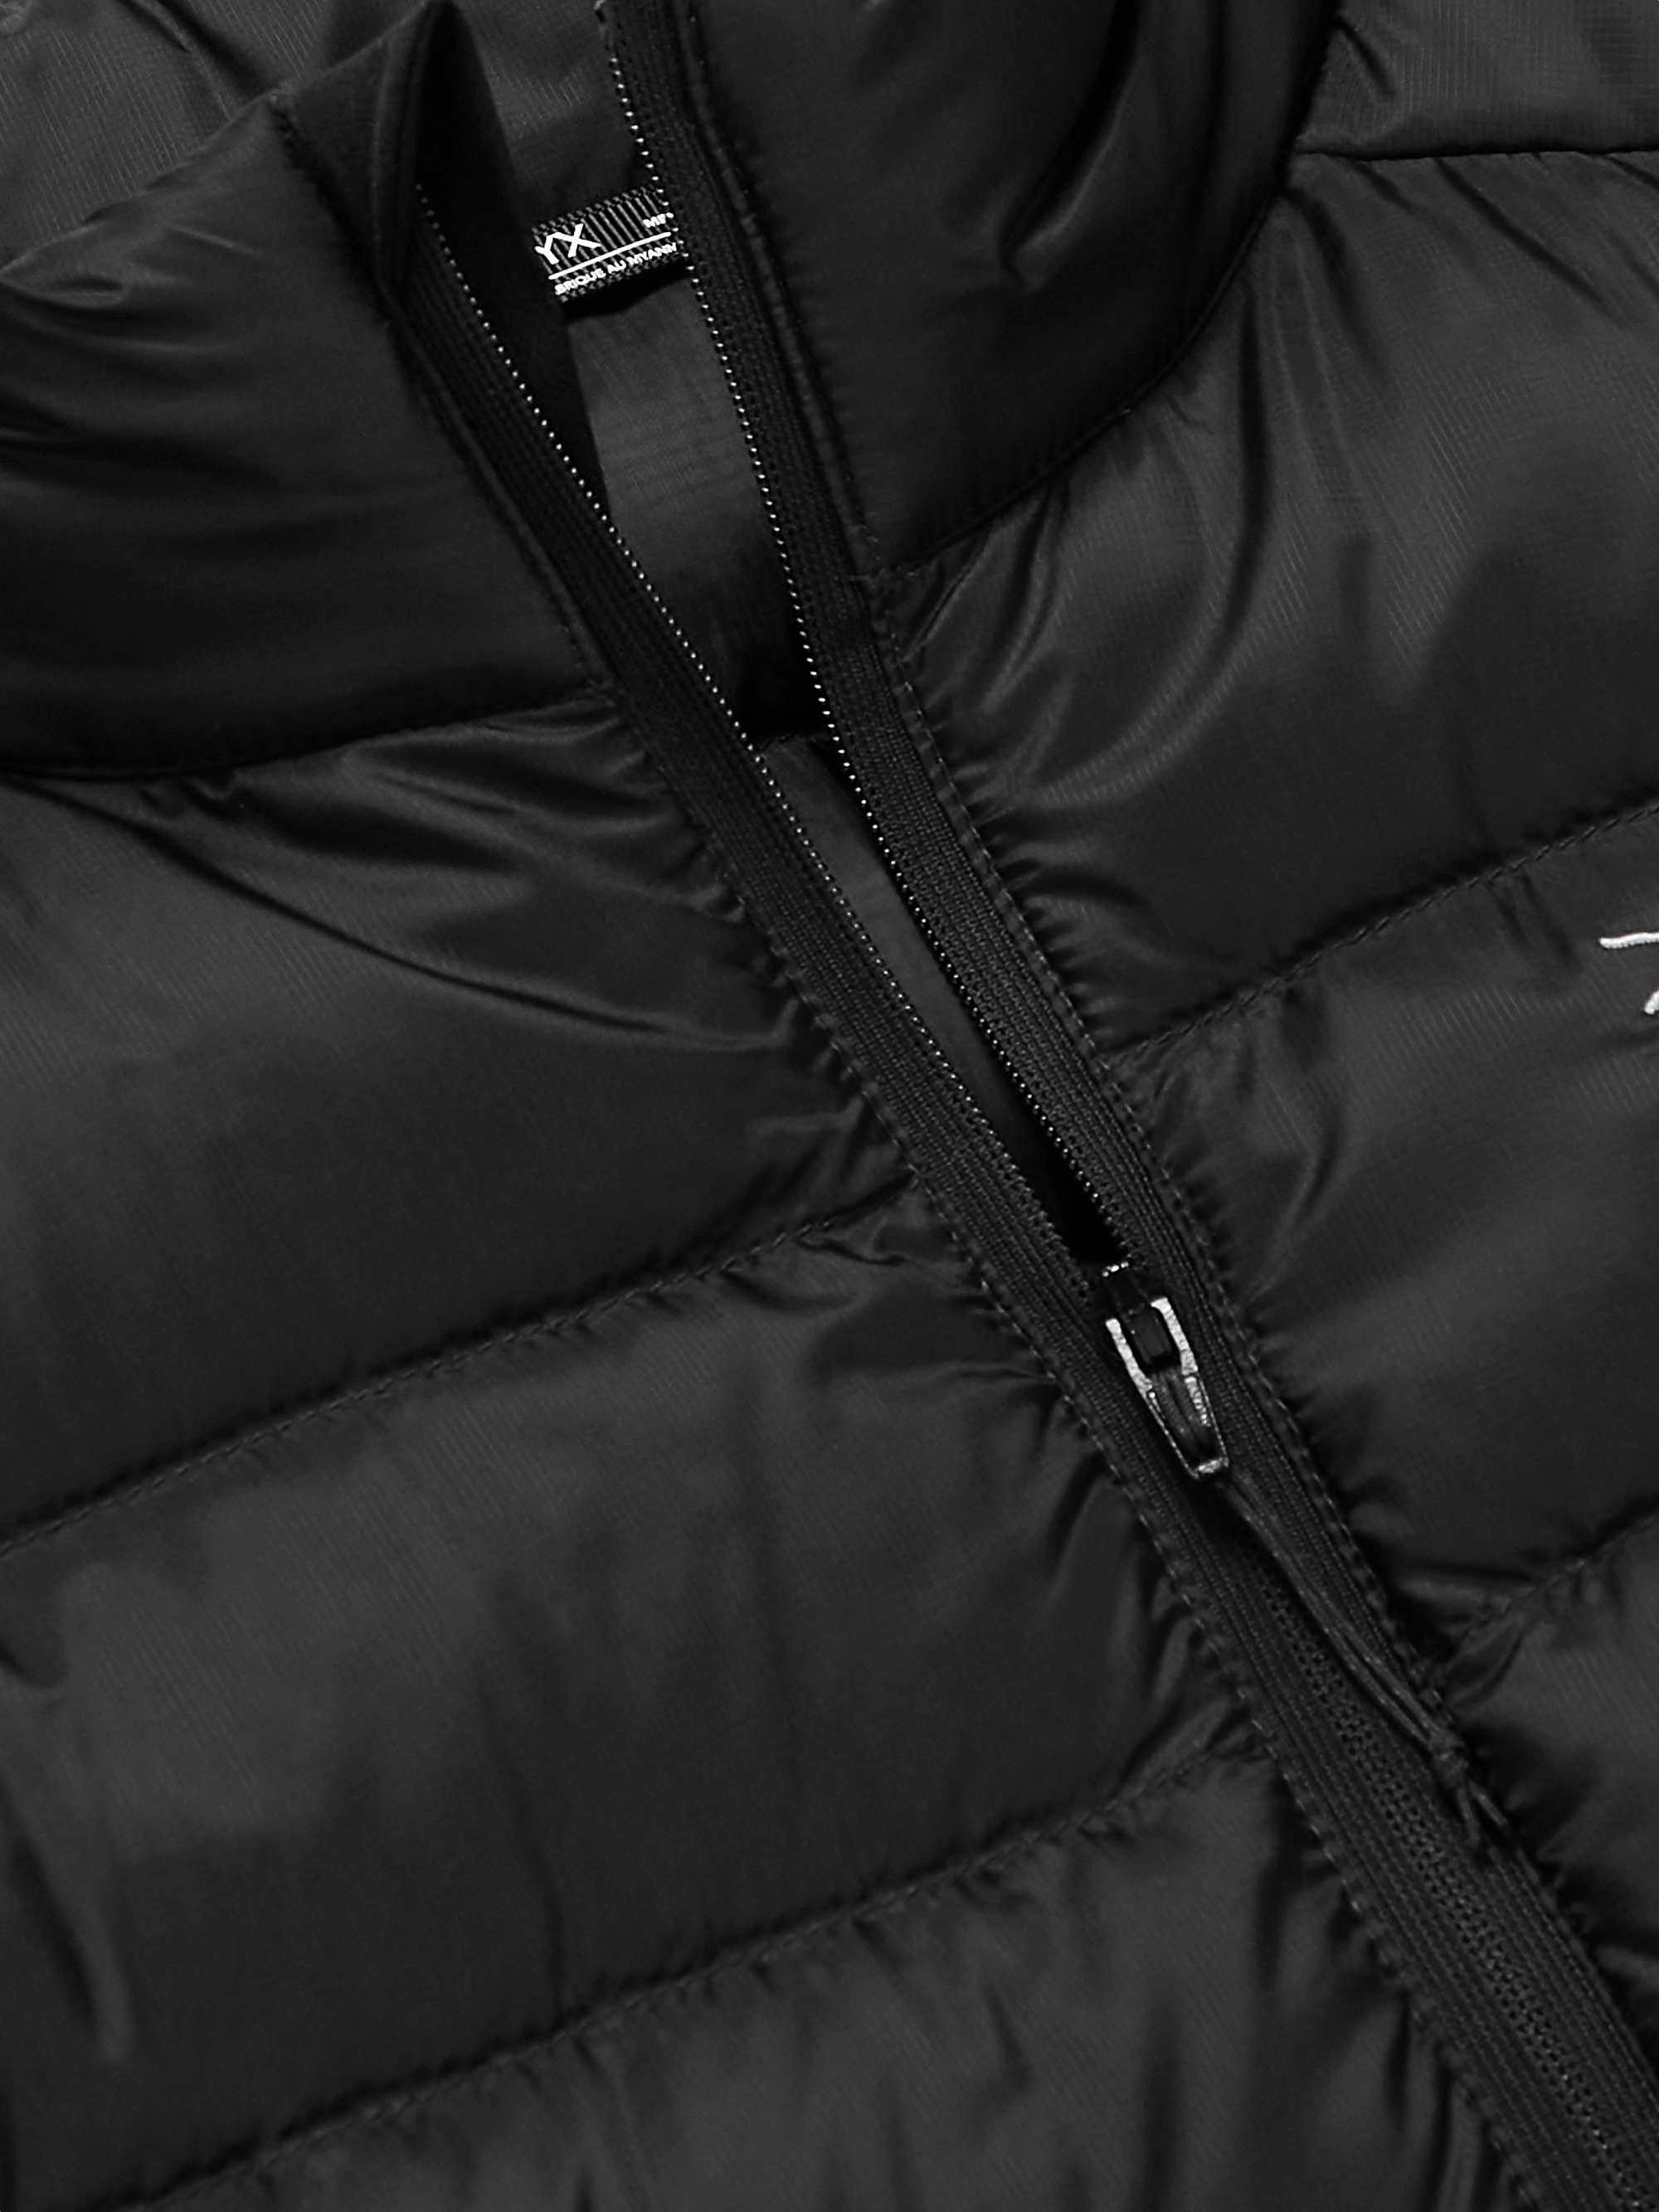 ARC'TERYX Cerium LT Slim-Fit Quilted Arato 10 Nylon Down Jacket